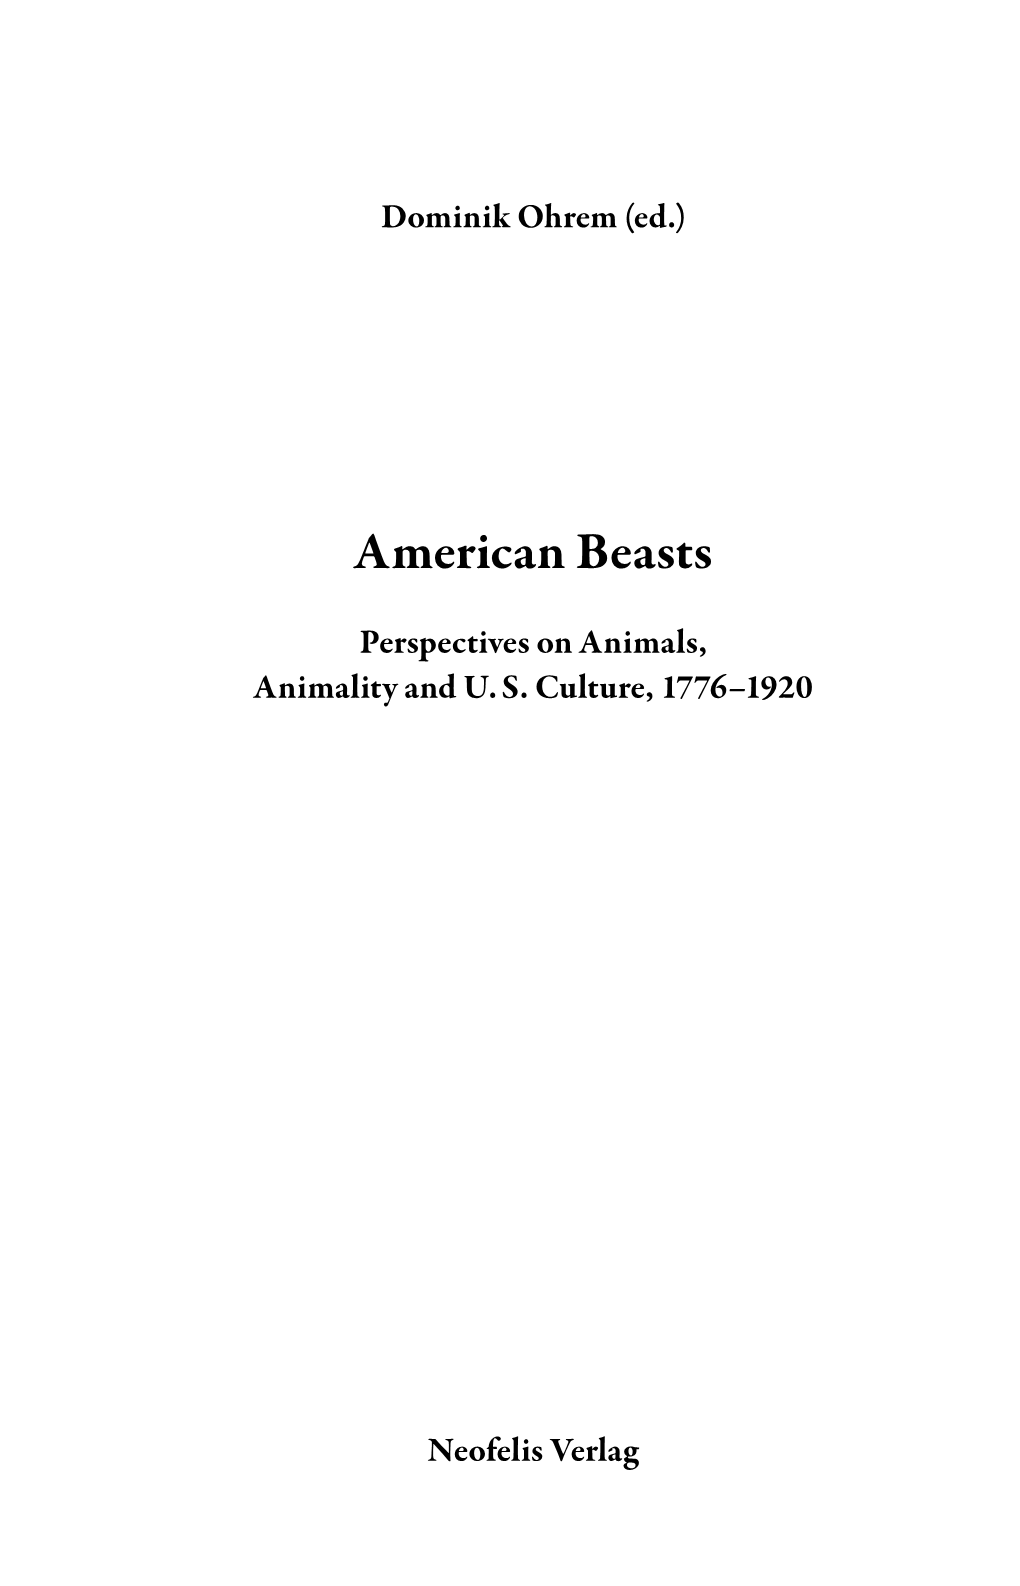 American Beasts